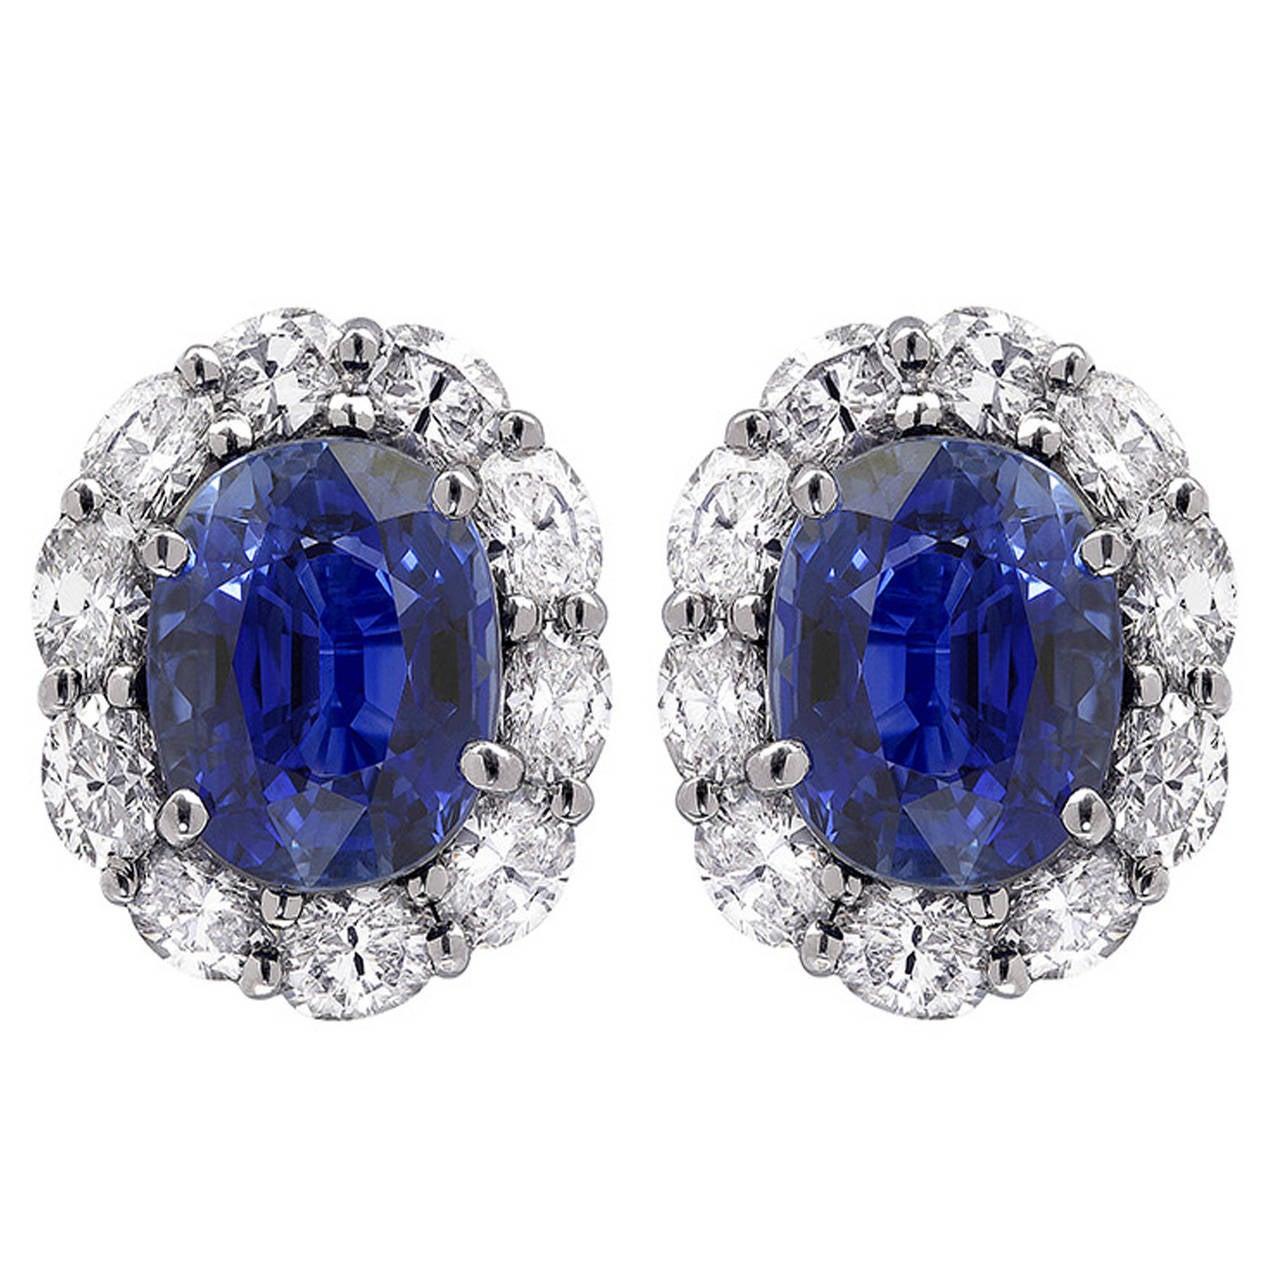 7.45 Carat Sapphire and Diamond Earrings